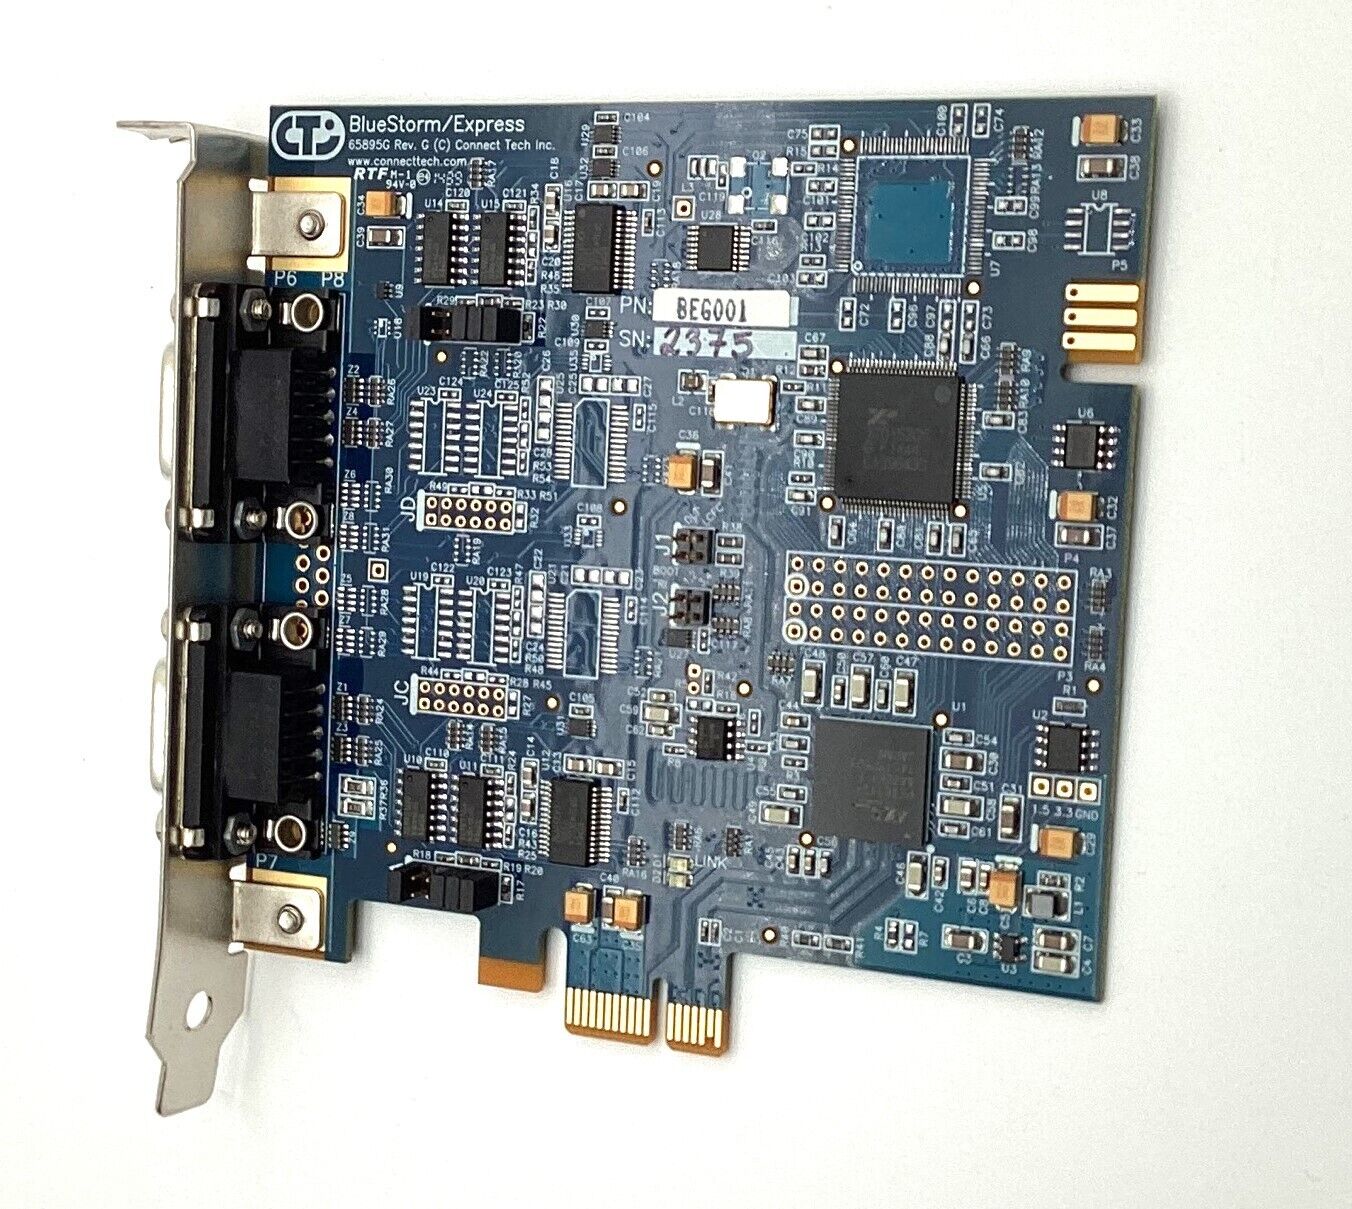 Connect Tech BlueStorm/Express 65895G PCI-E X1 Serial Adapter Card